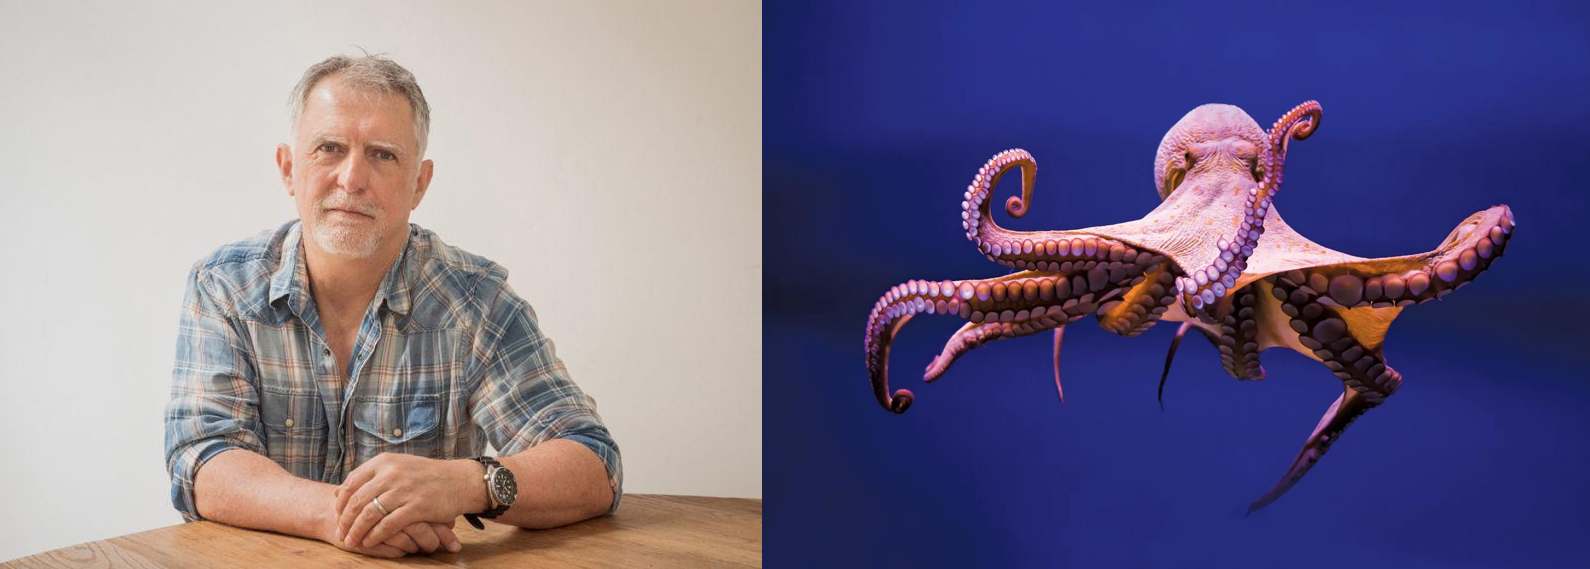 Peter Godfrey-Smith is not an octopus.